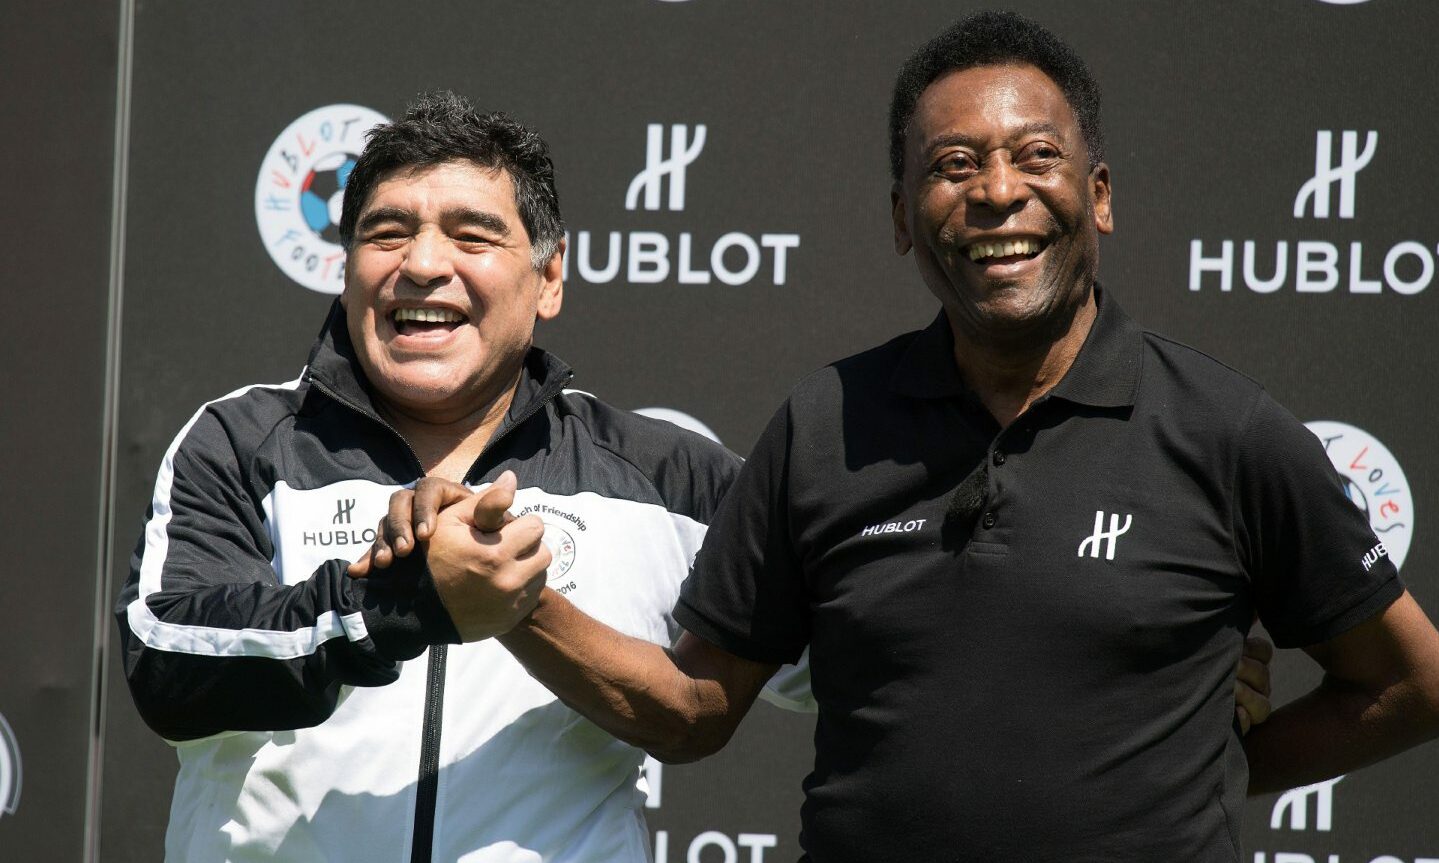 Pele and Maradona shaking hands